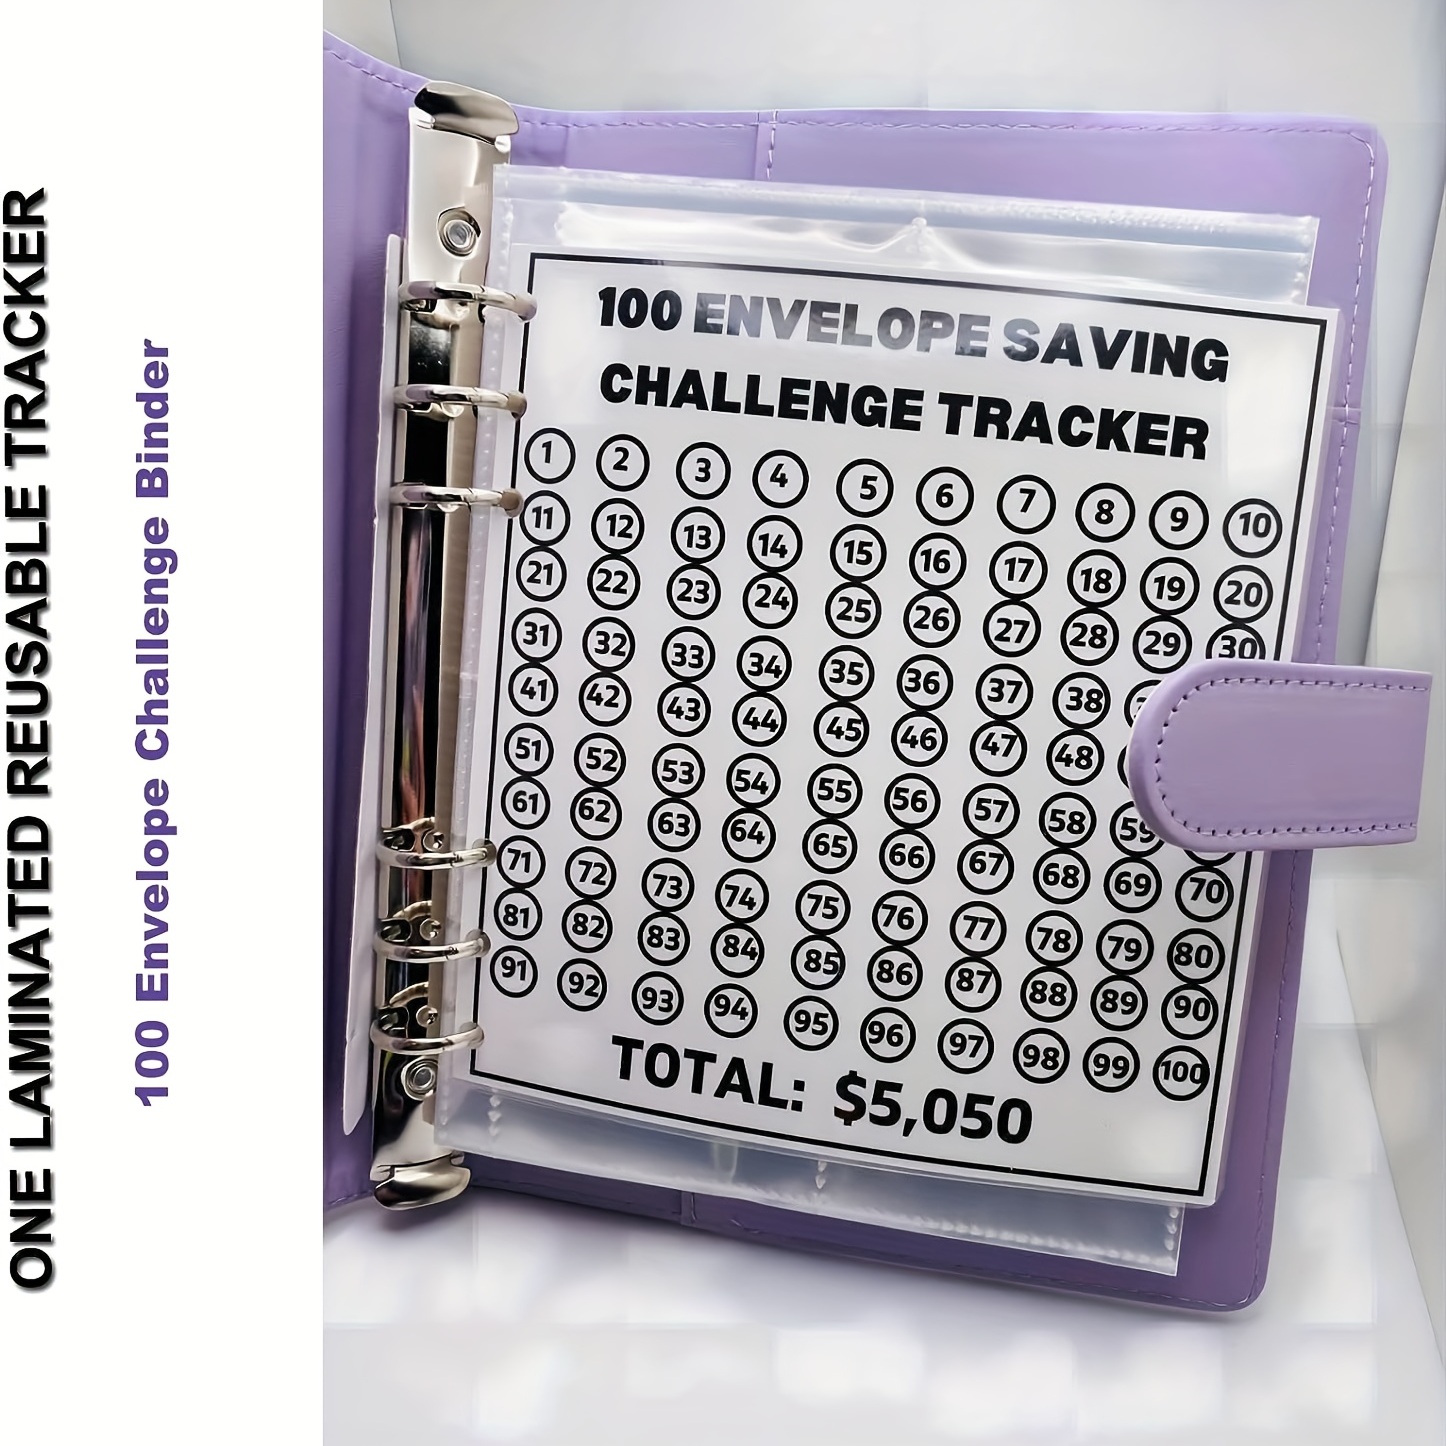 Carpeta de desafío de 100 sobres, carpeta de desafíos de ahorro, kit de  caja de desafíos de ahorro de efectivo, carpeta de presupuesto con sobres  de